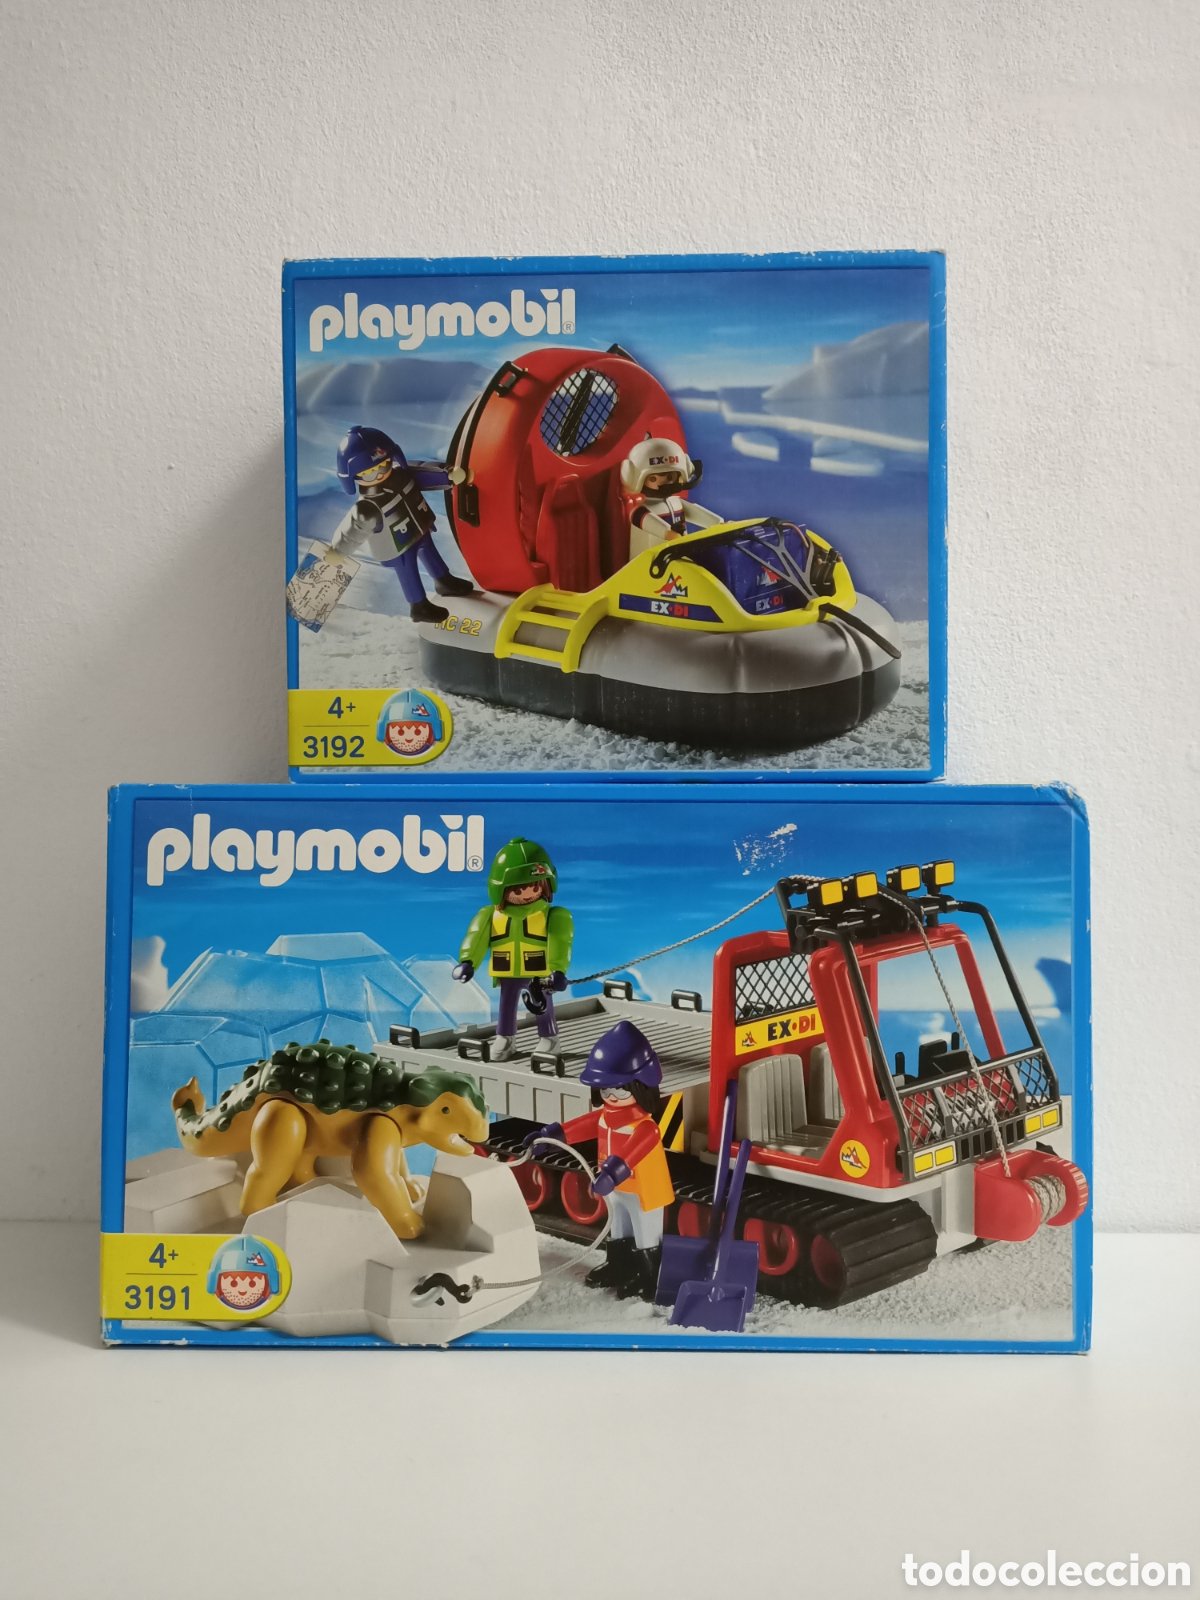 playmobil custom thor marvel cómic cine superhé - Acheter Playmobil sur  todocoleccion